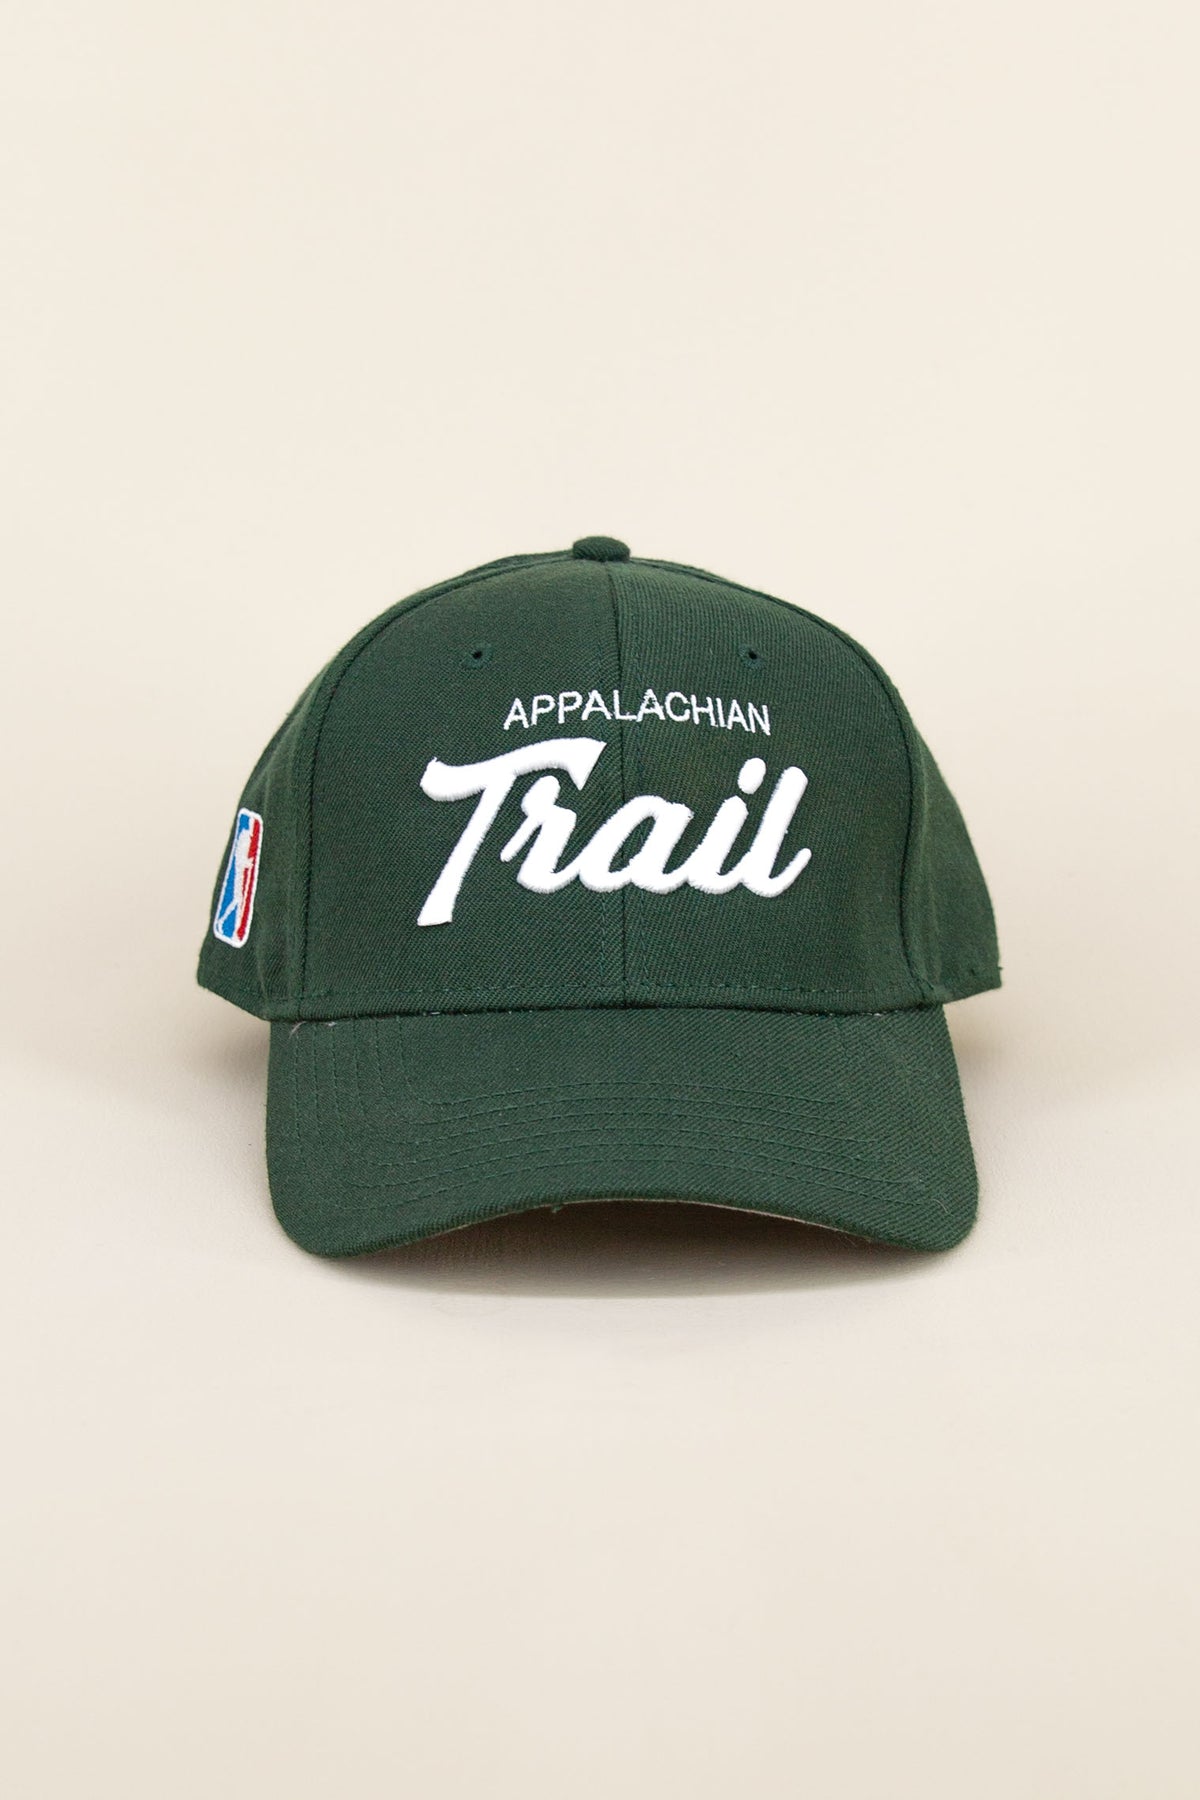 appalachian trail hat